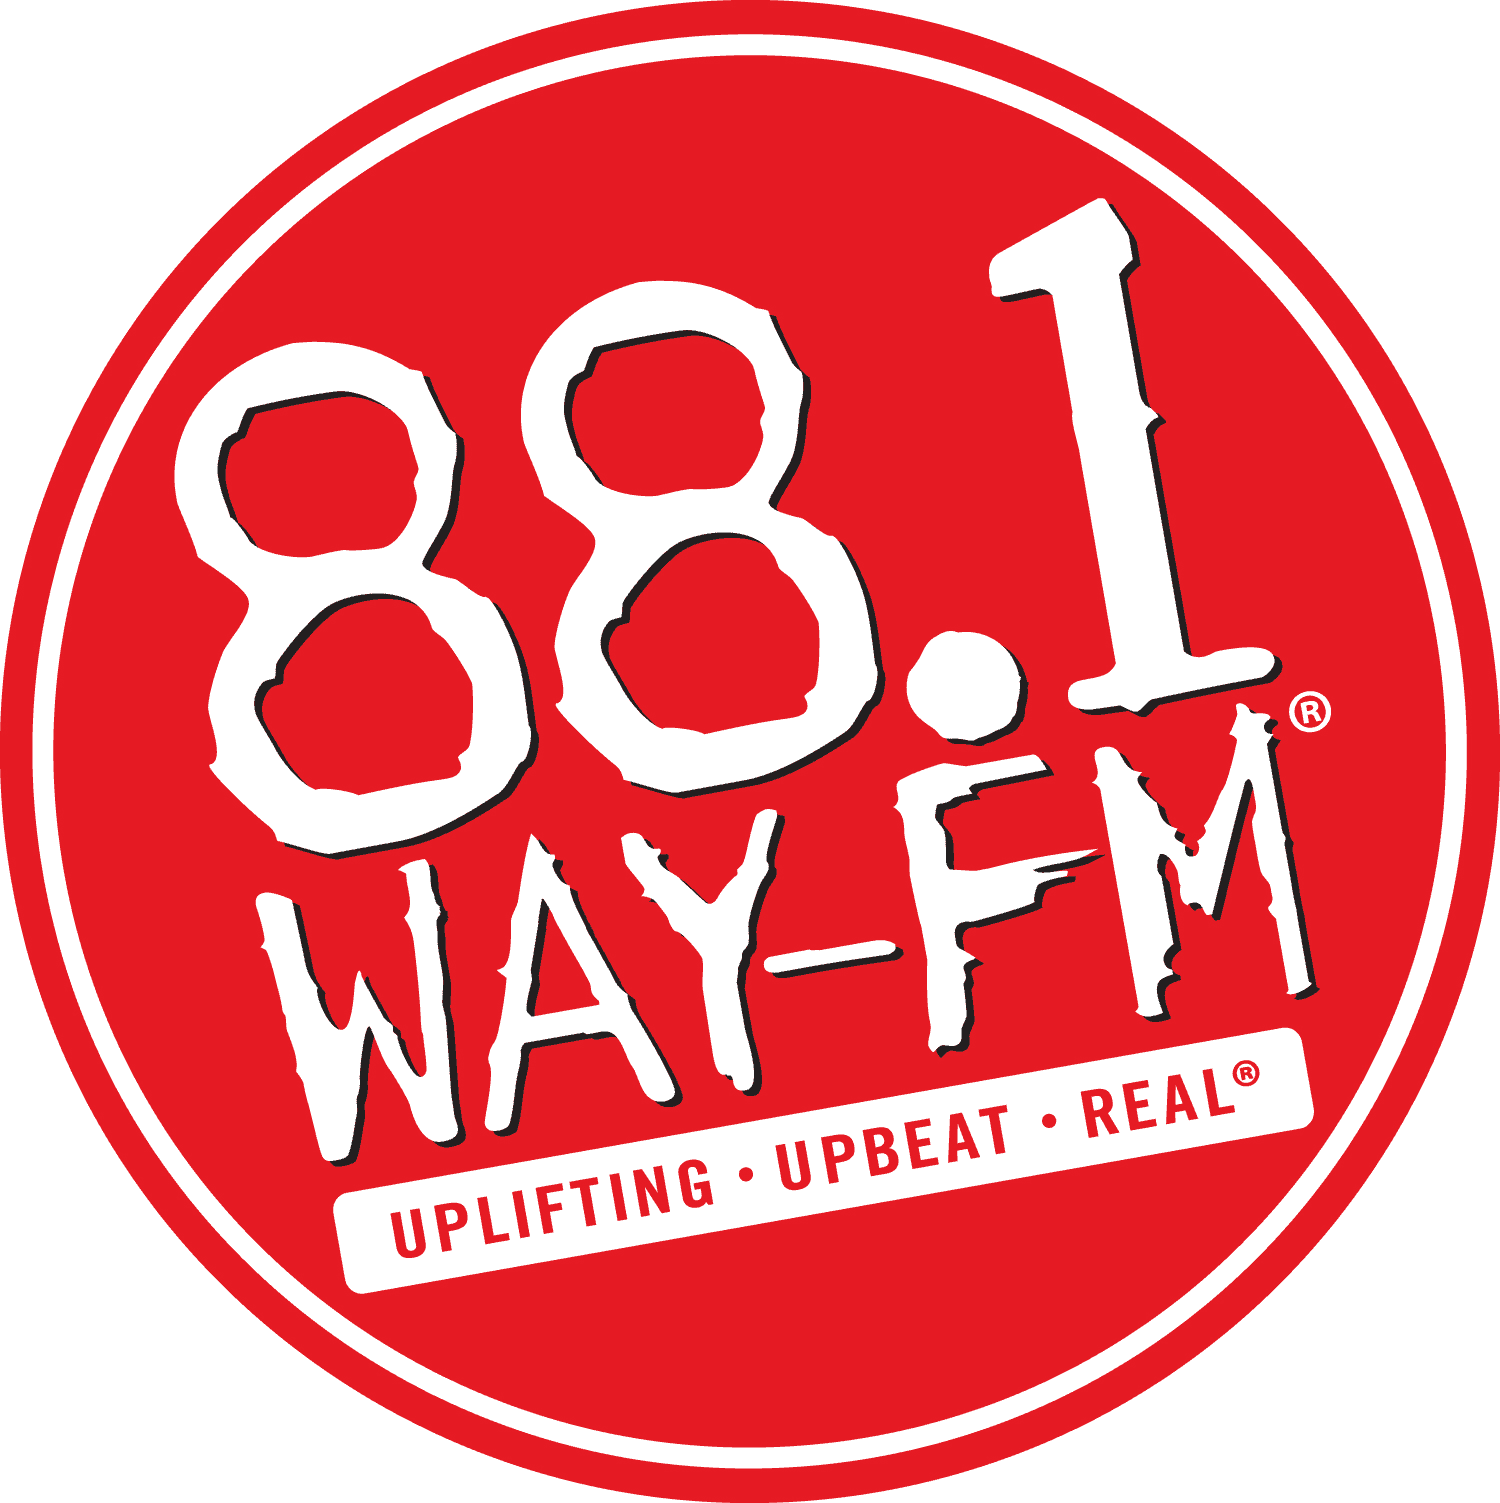 88.0 Way-FM